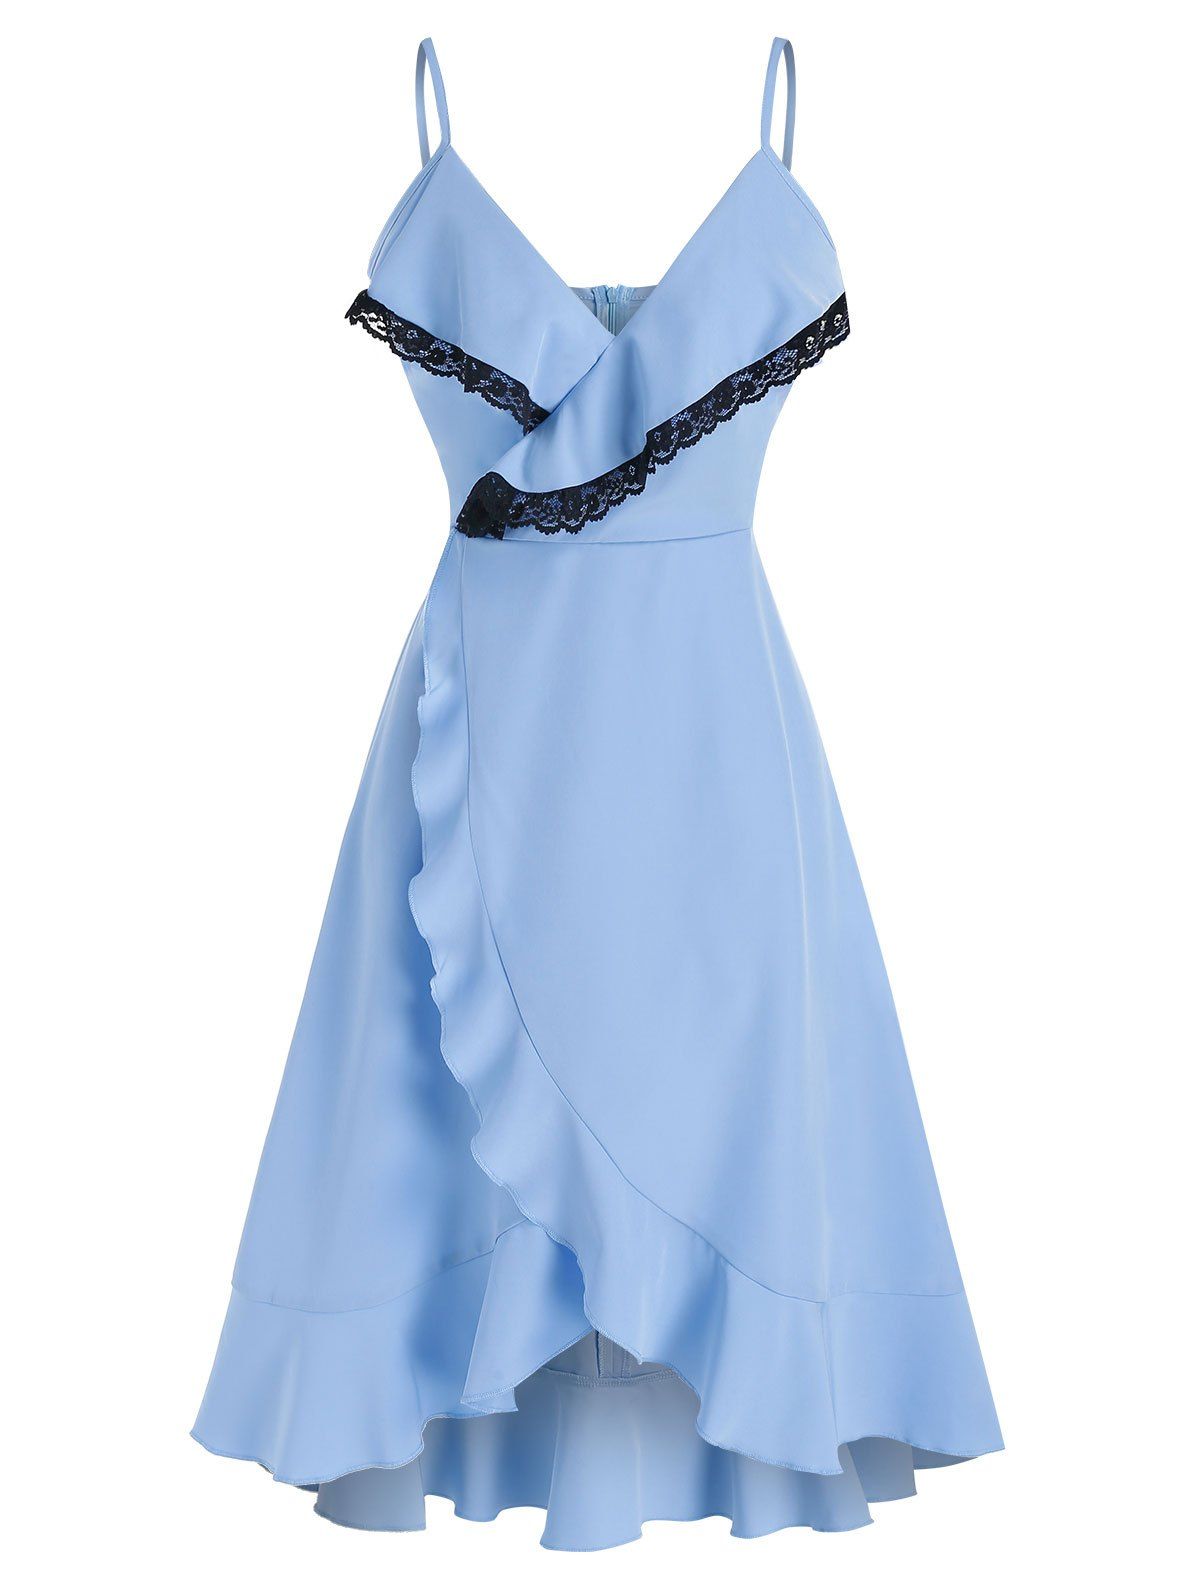 High Low A Line Dress Ruffle Low Cut Surplice Lace Insert Overlap Strappy Dress - LIGHT BLUE XXXL